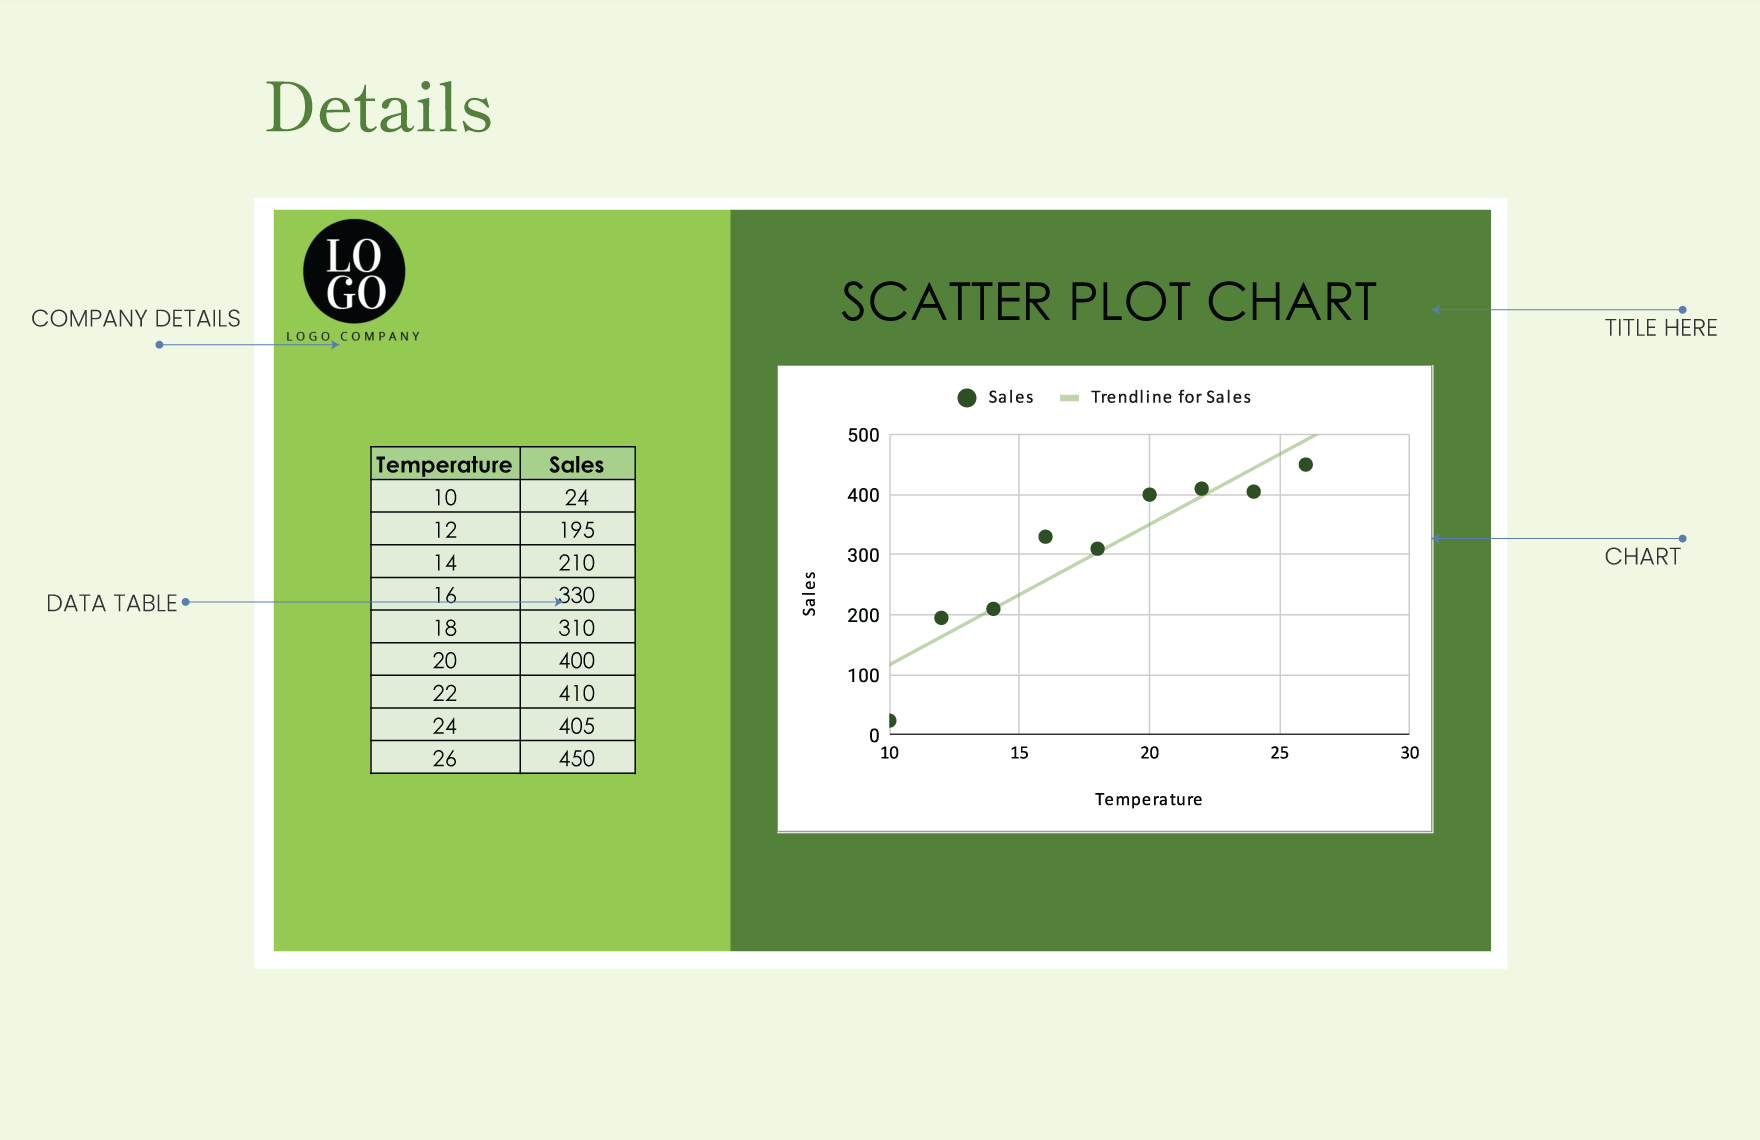 Scatterplot Chart